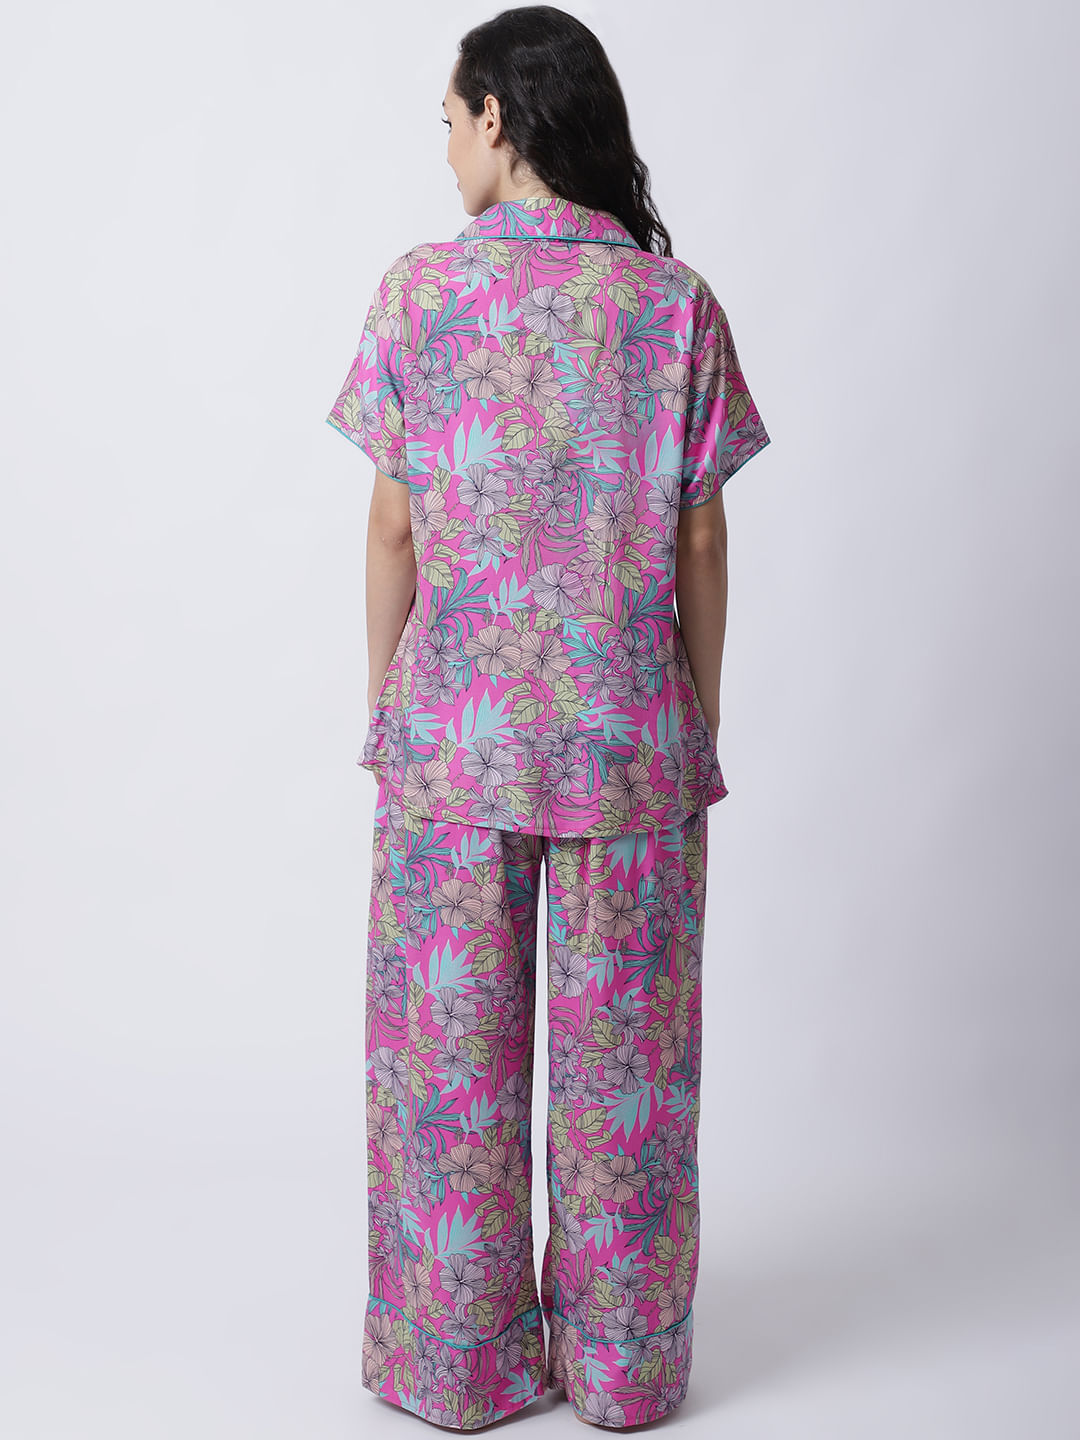 Rayon Pink Botanical Printed Night Suit set of Shirt & Pyjama trouser